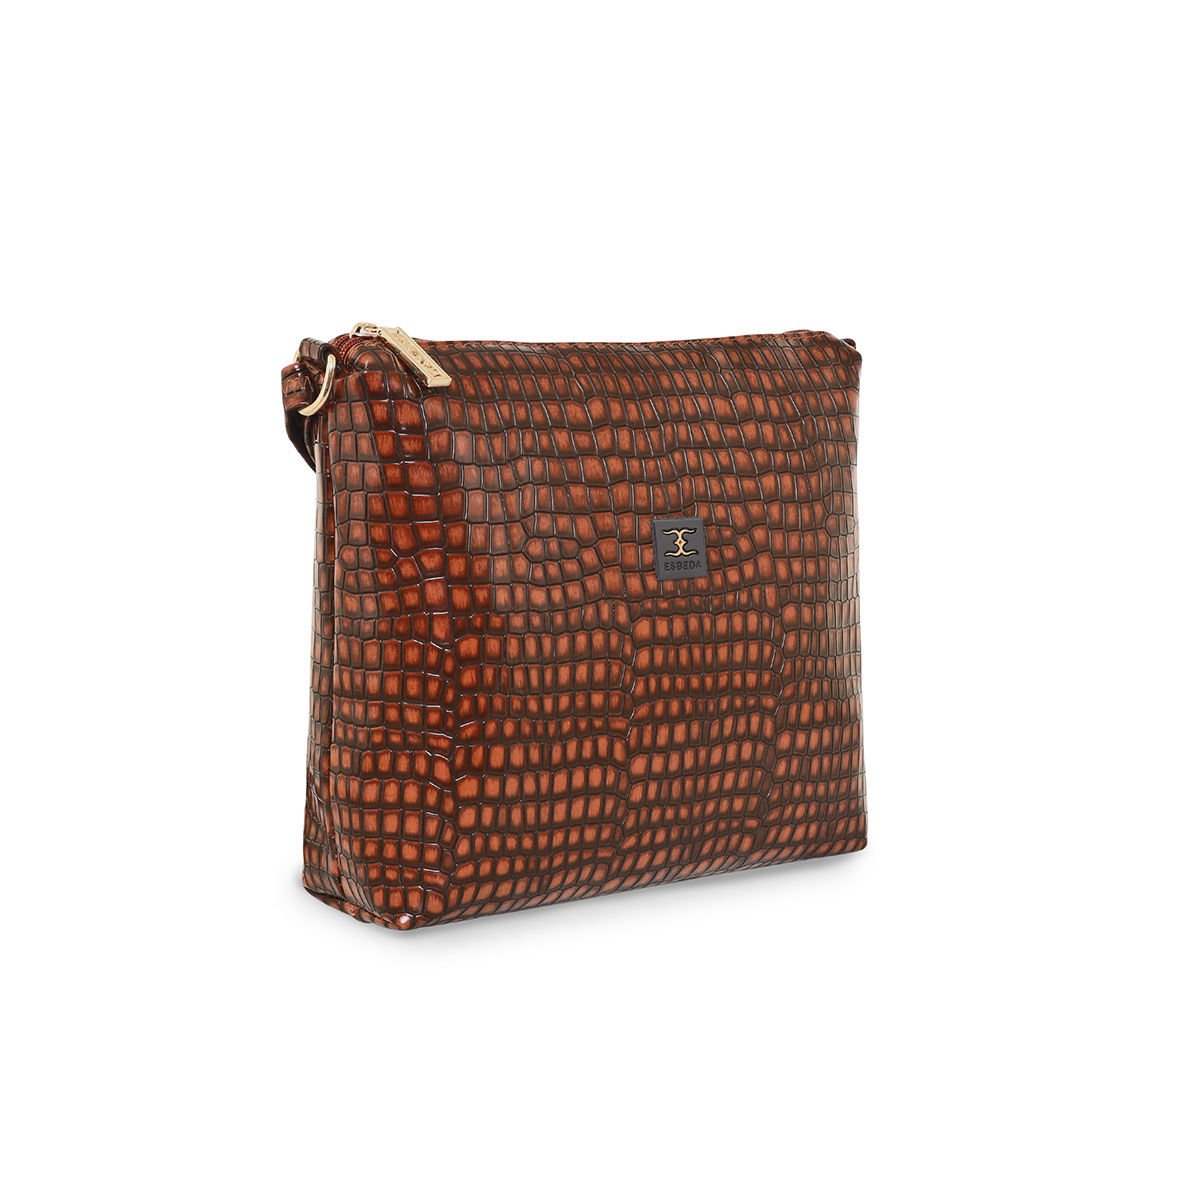 ESBEDA Rust Color Floral Embroidery Pattern Handbag for Women